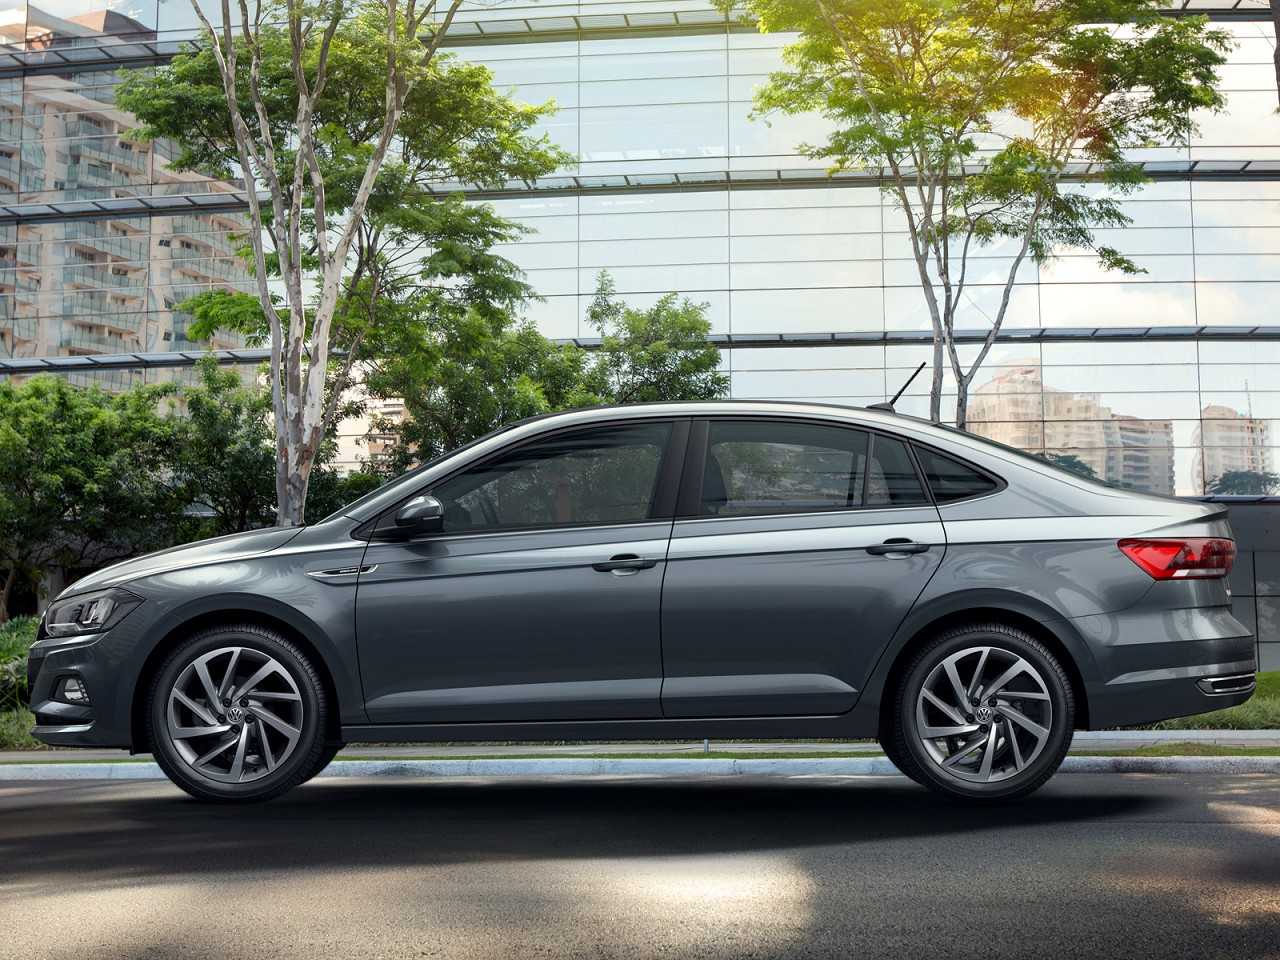 VolkswagenVirtus 2018 - lateral